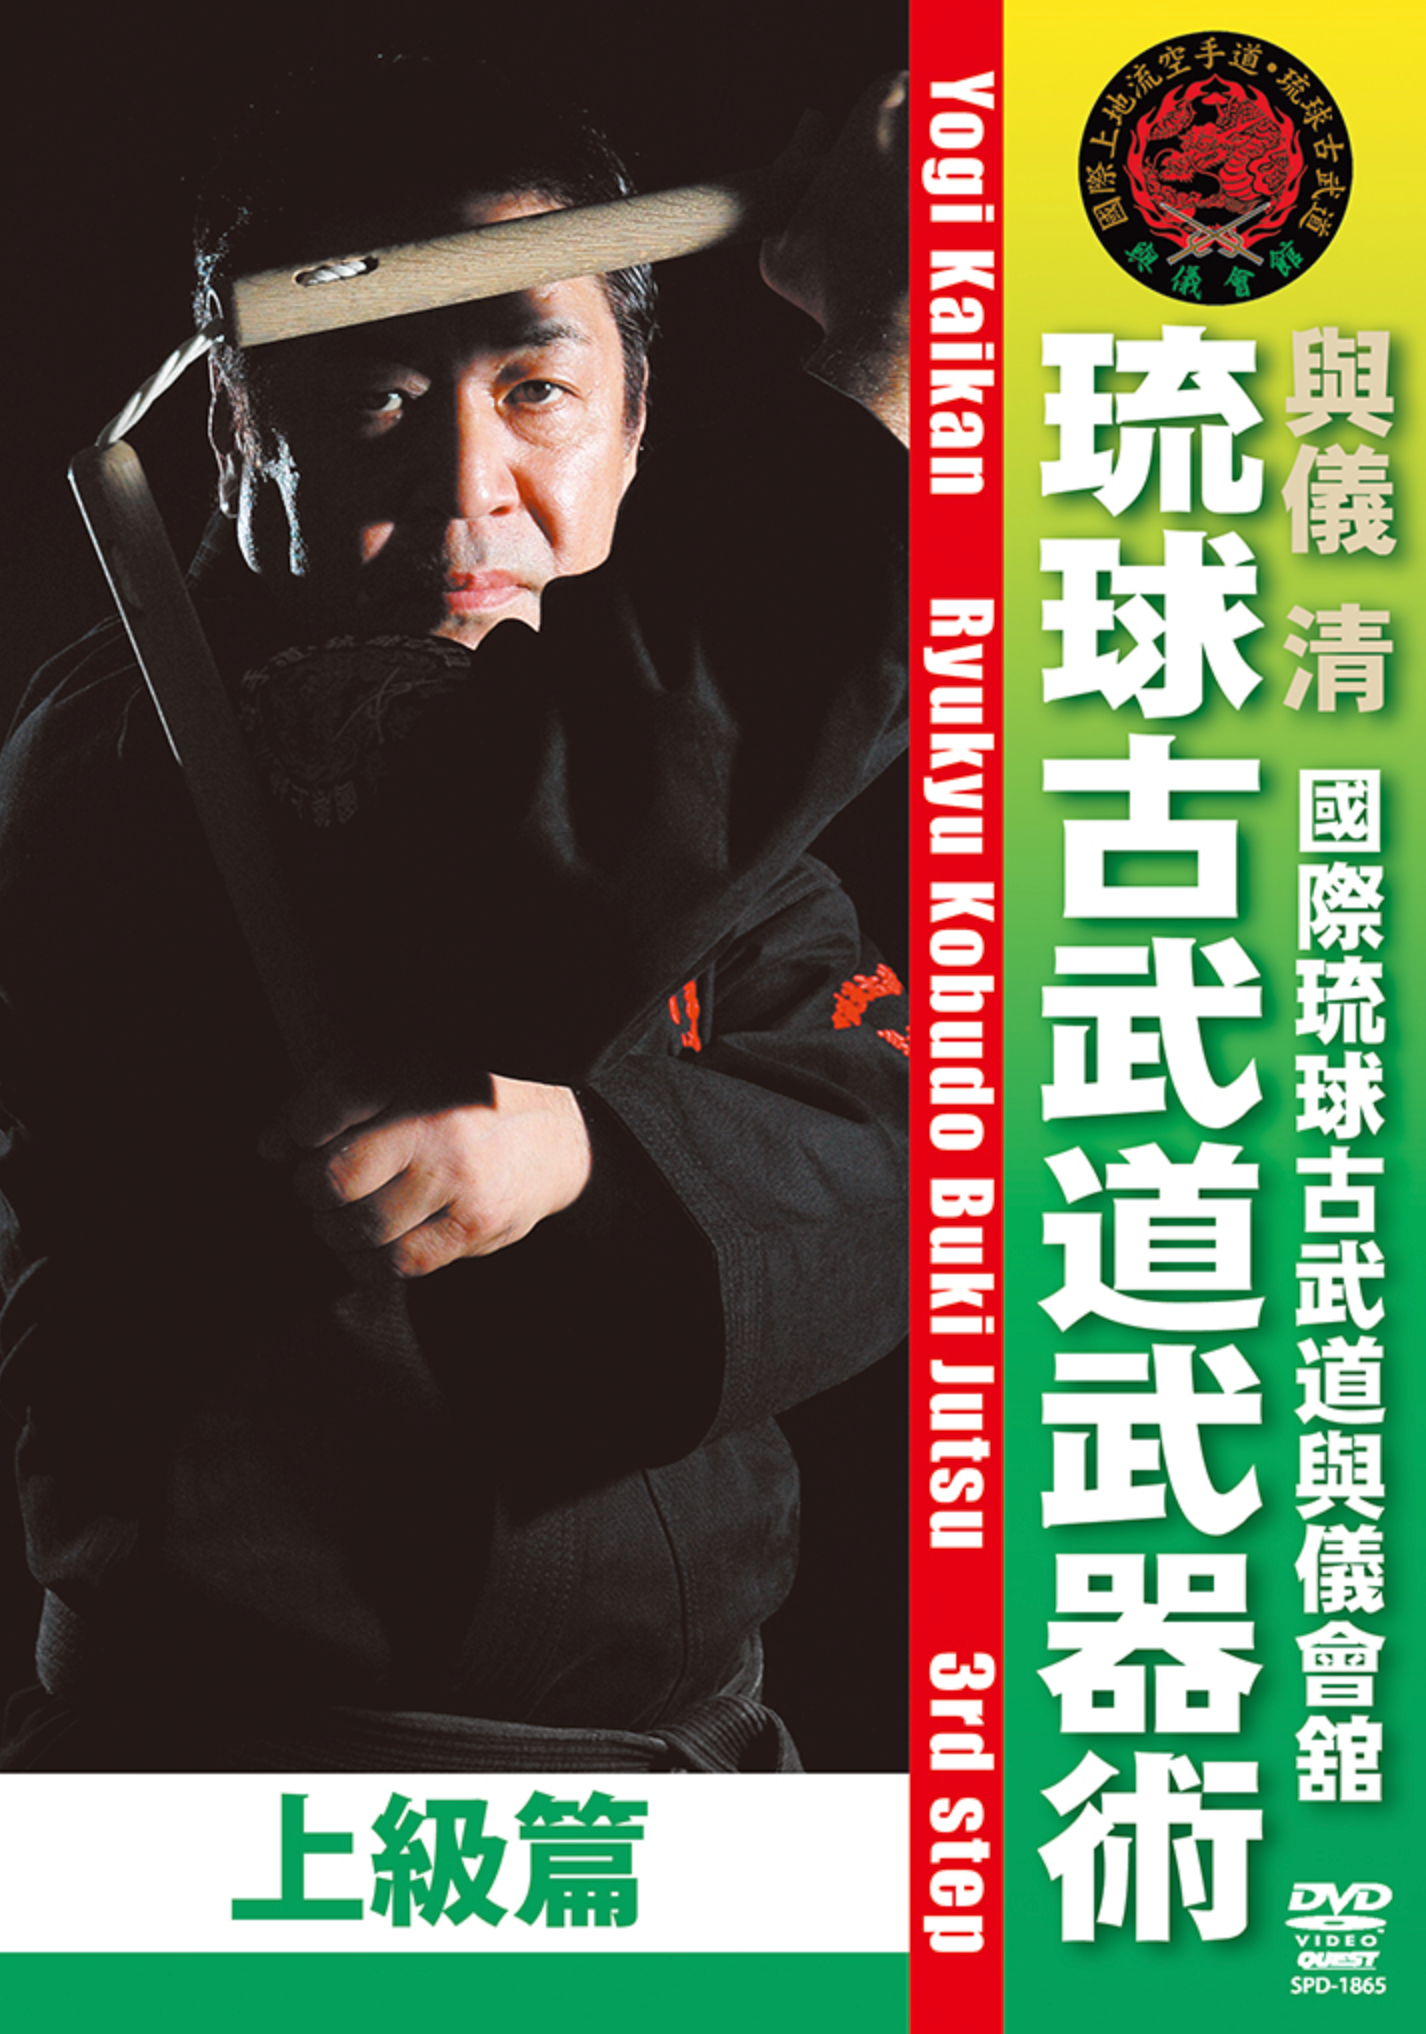 Ryukyu Kobujutsu Buki Jutsu Vol 3 DVD with Kiyoshi Yogi - Budovideos